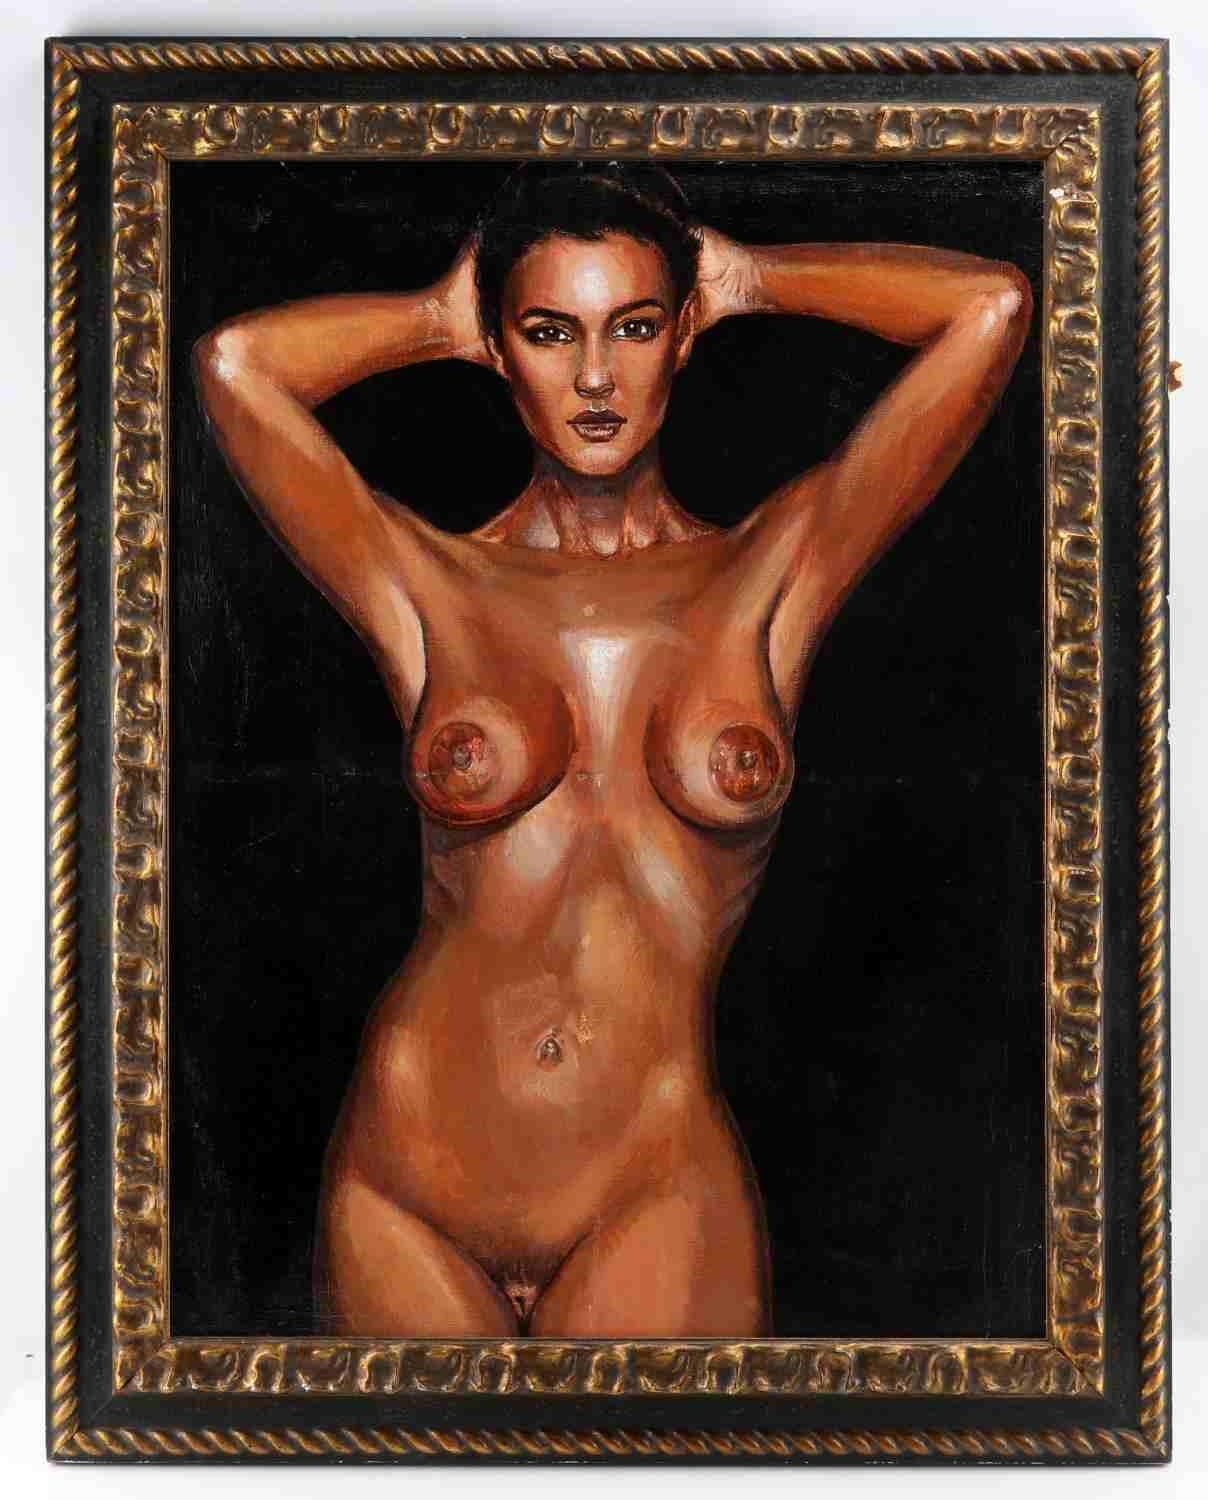 Monica wright nude